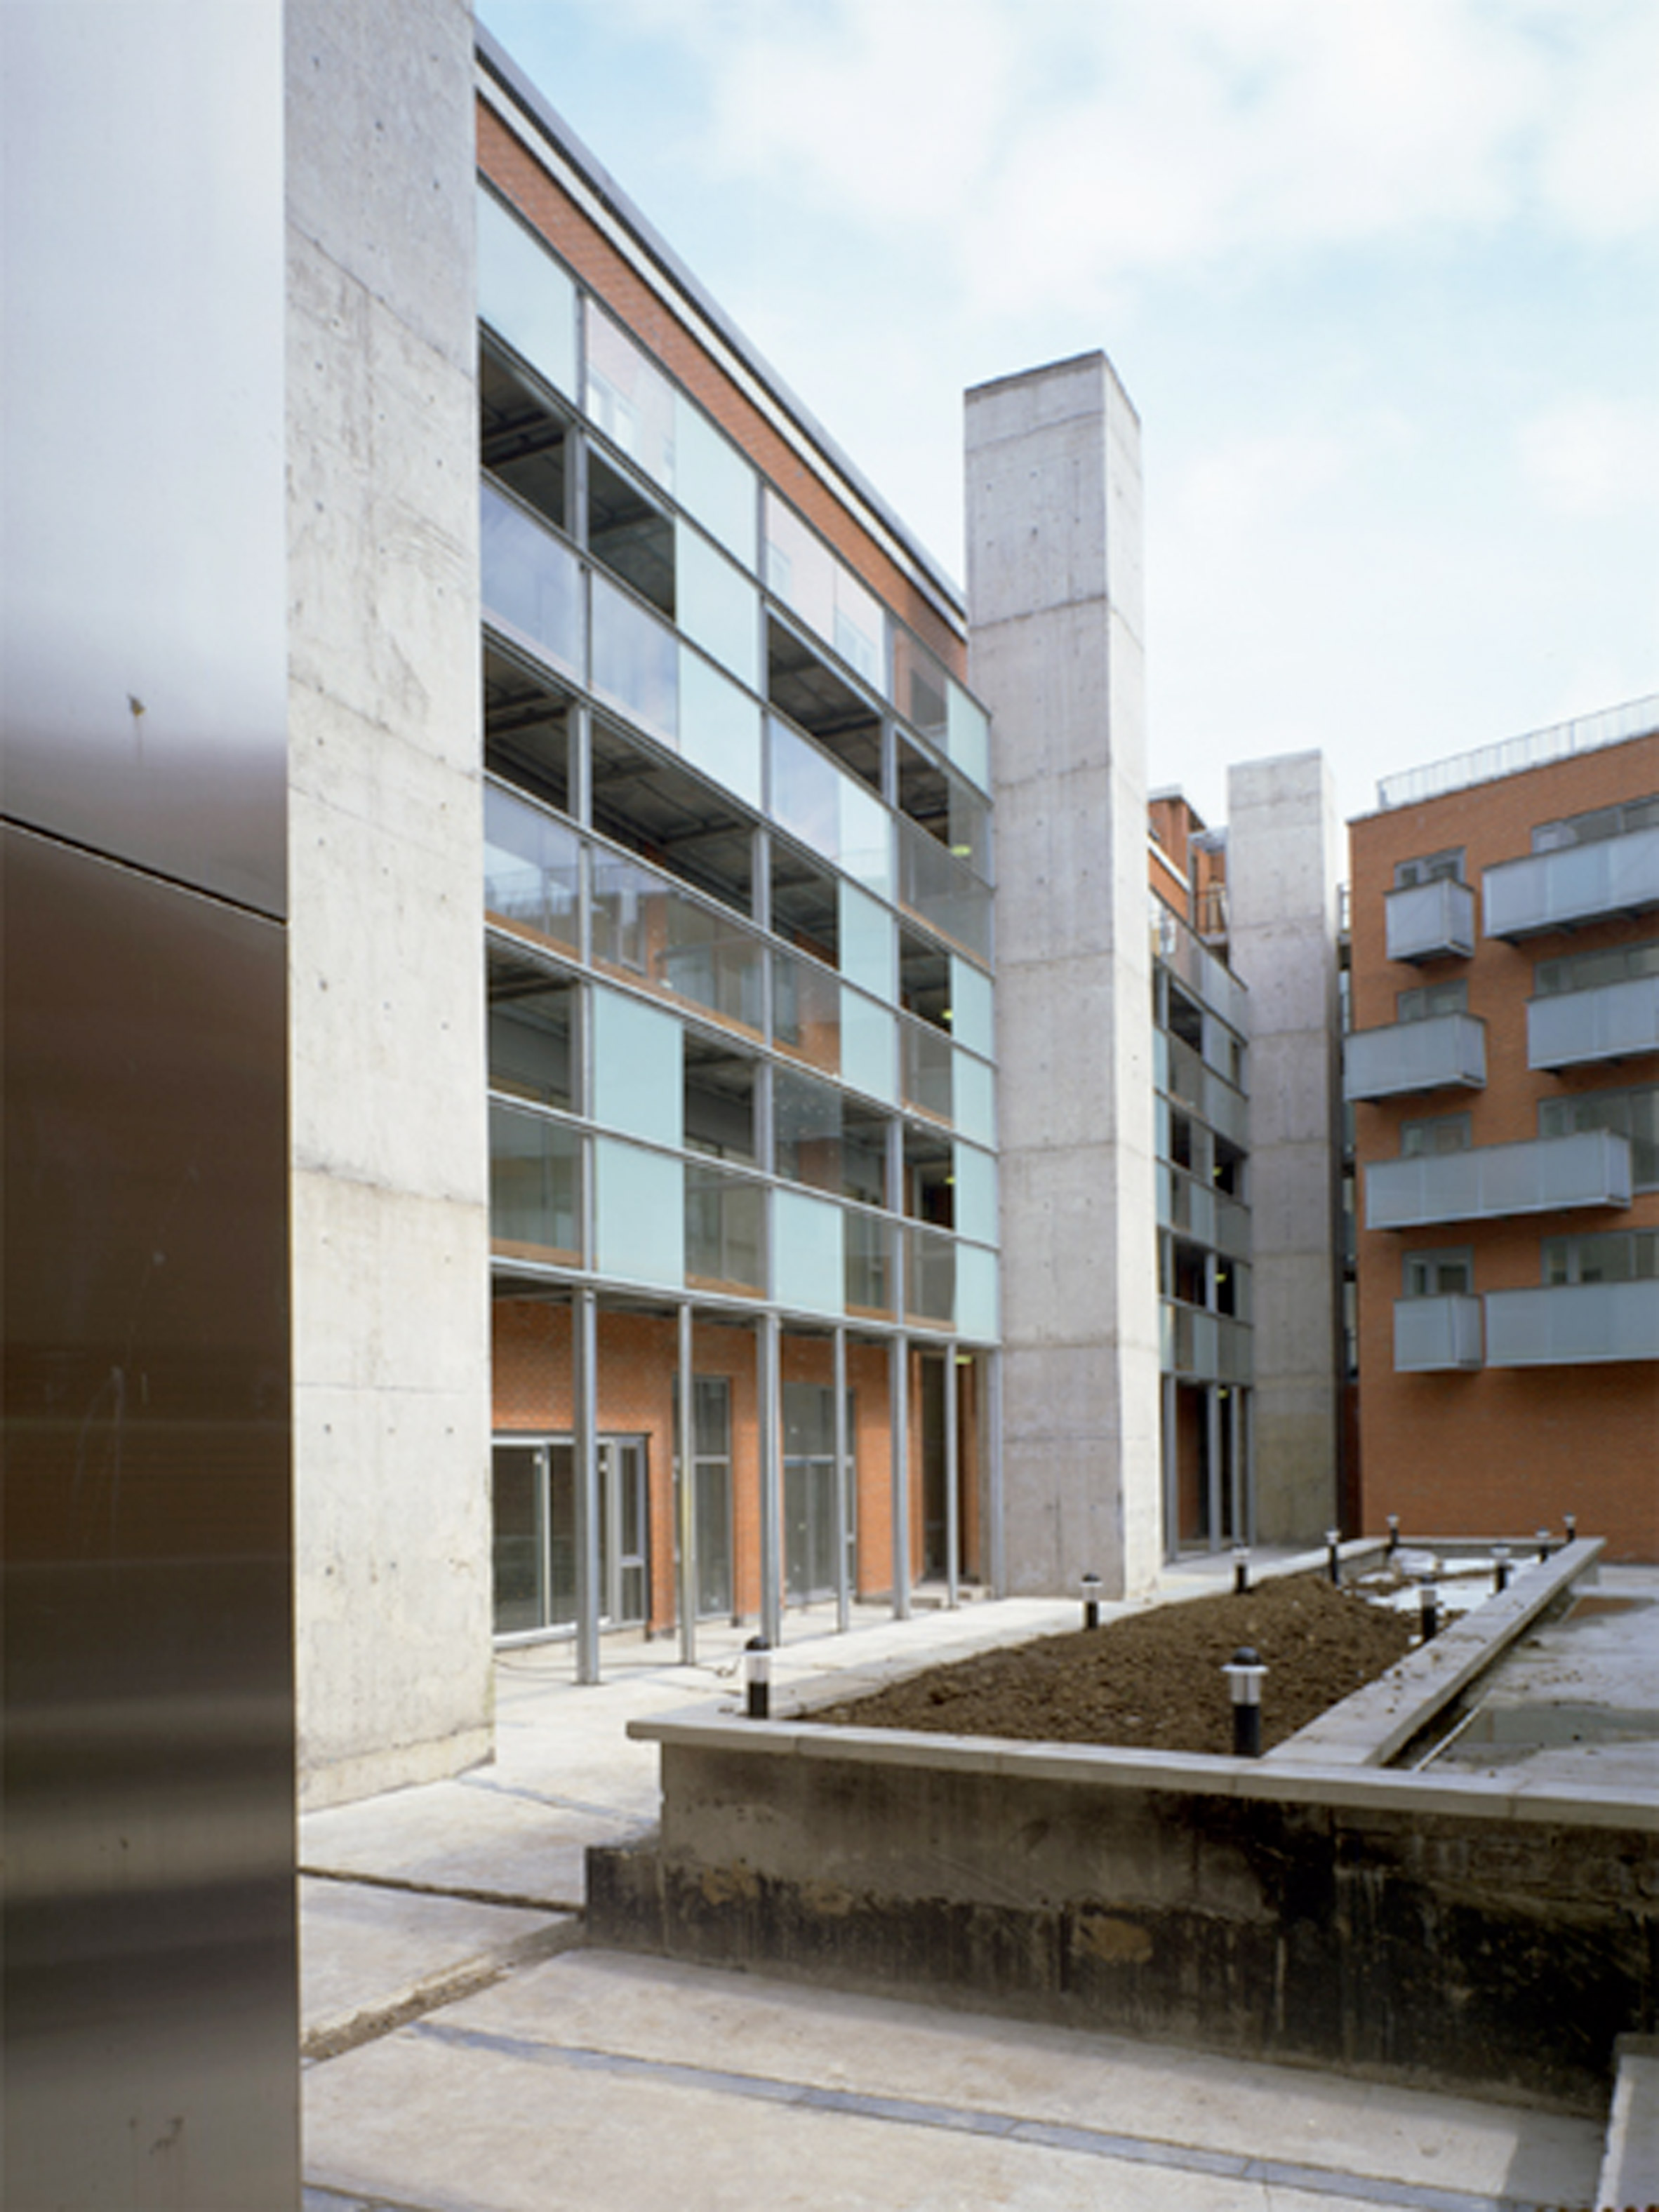 North King Street Housing, Dublin, Ireland, 2000, by Universita Luigi Bocconi School of Economics; Milan, Italy, 2008, by Grafton Architects